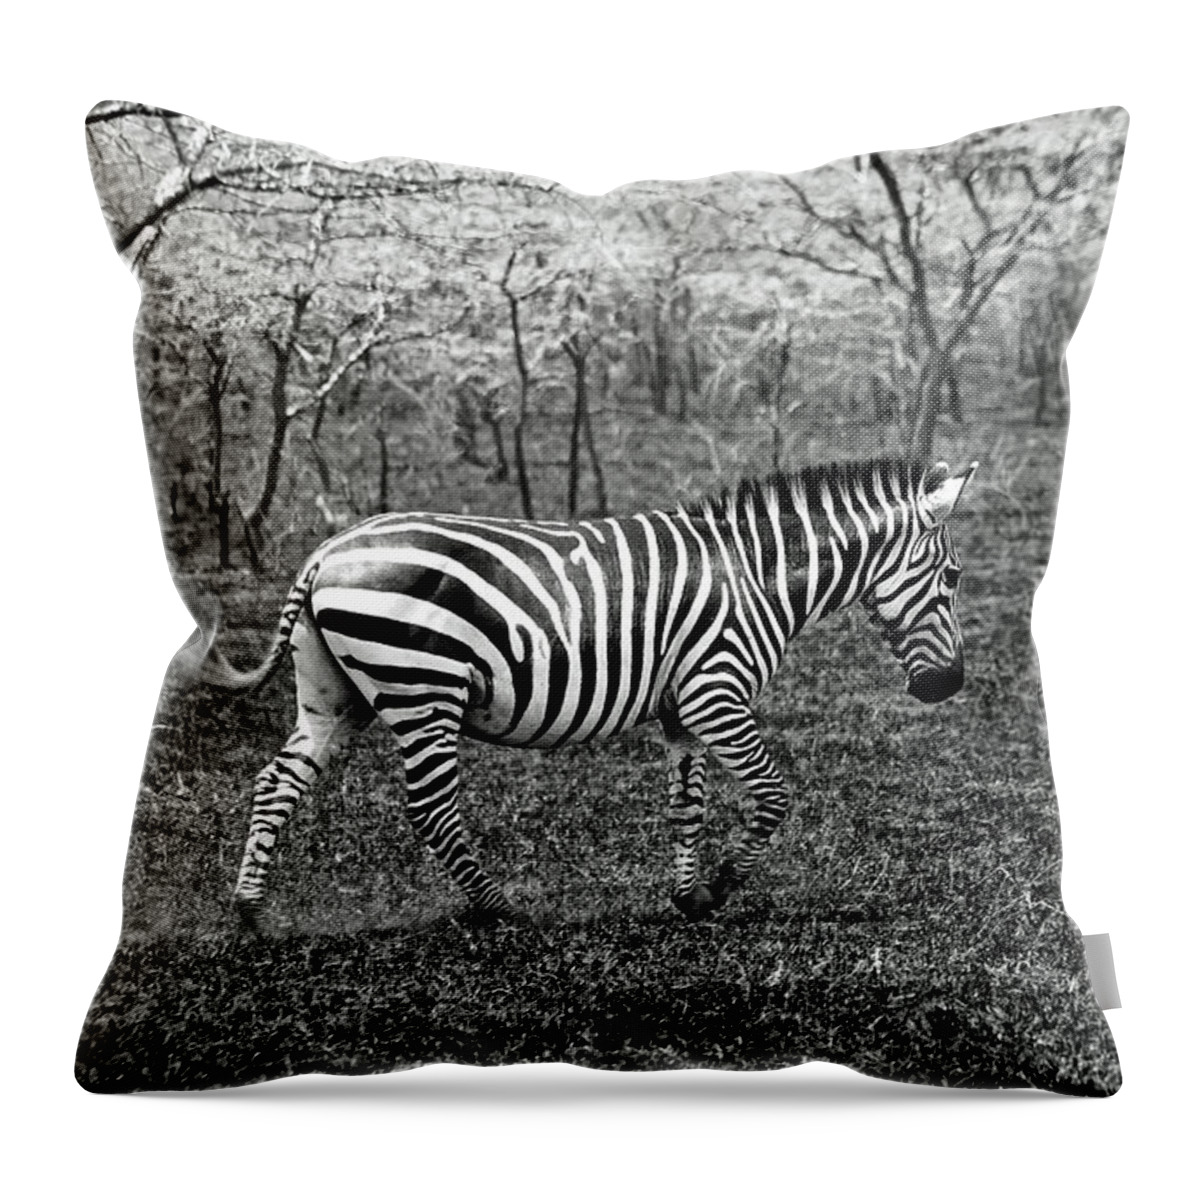 Uganda Throw Pillow featuring the photograph Lone Zebra by Michael Cinnamond